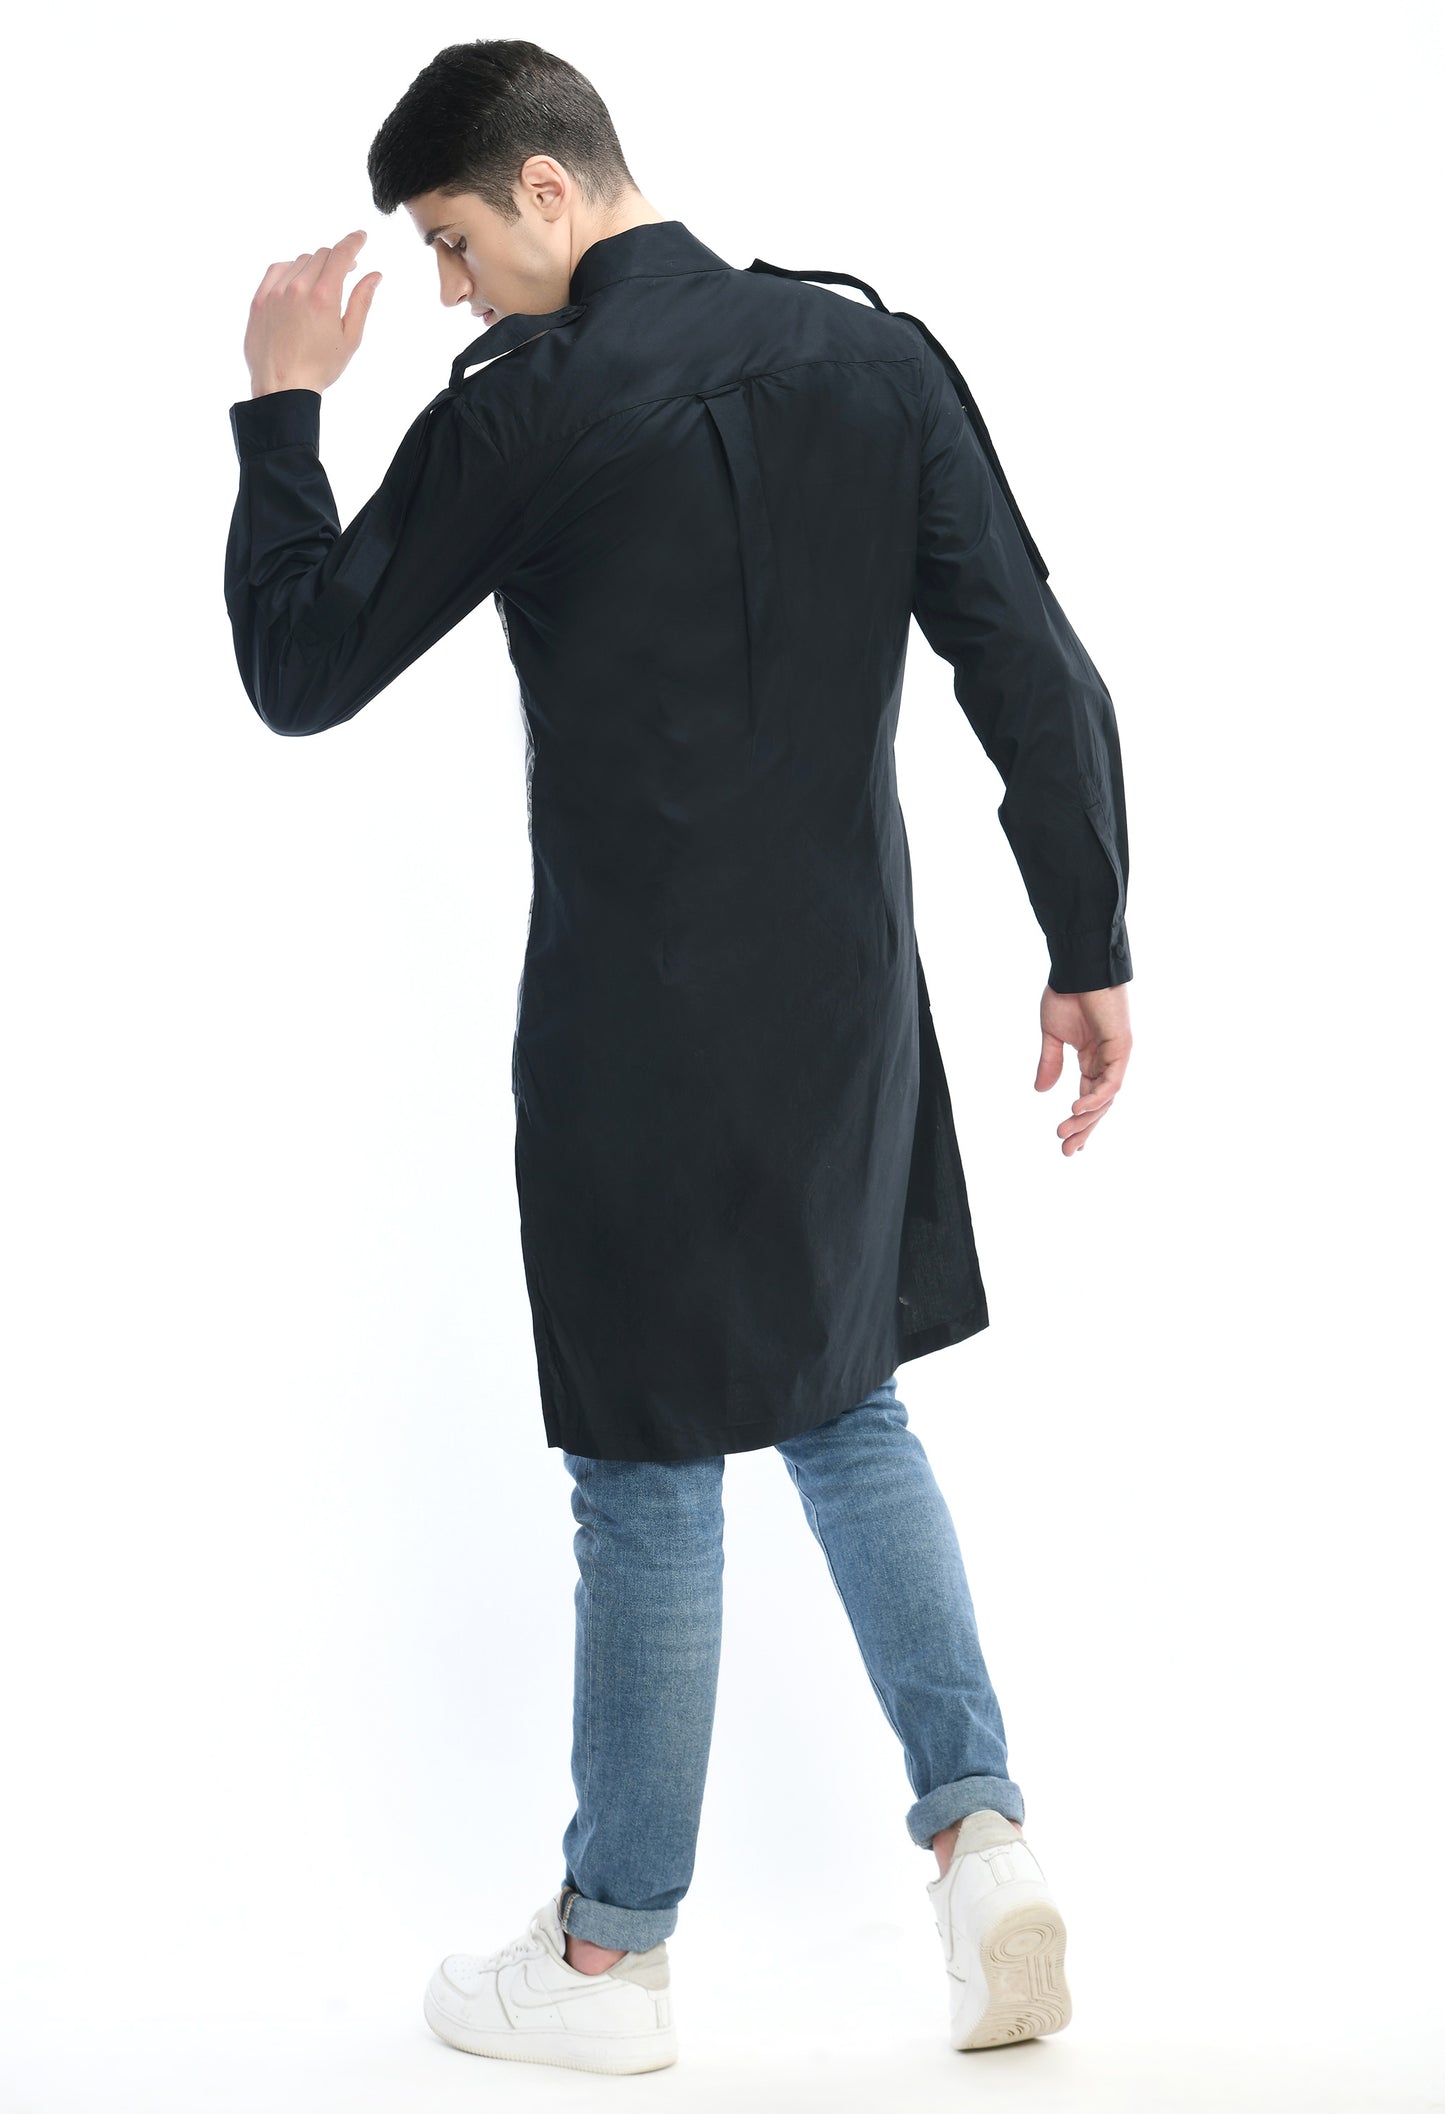 Black high low, stylish cotton shirt with digital print on it